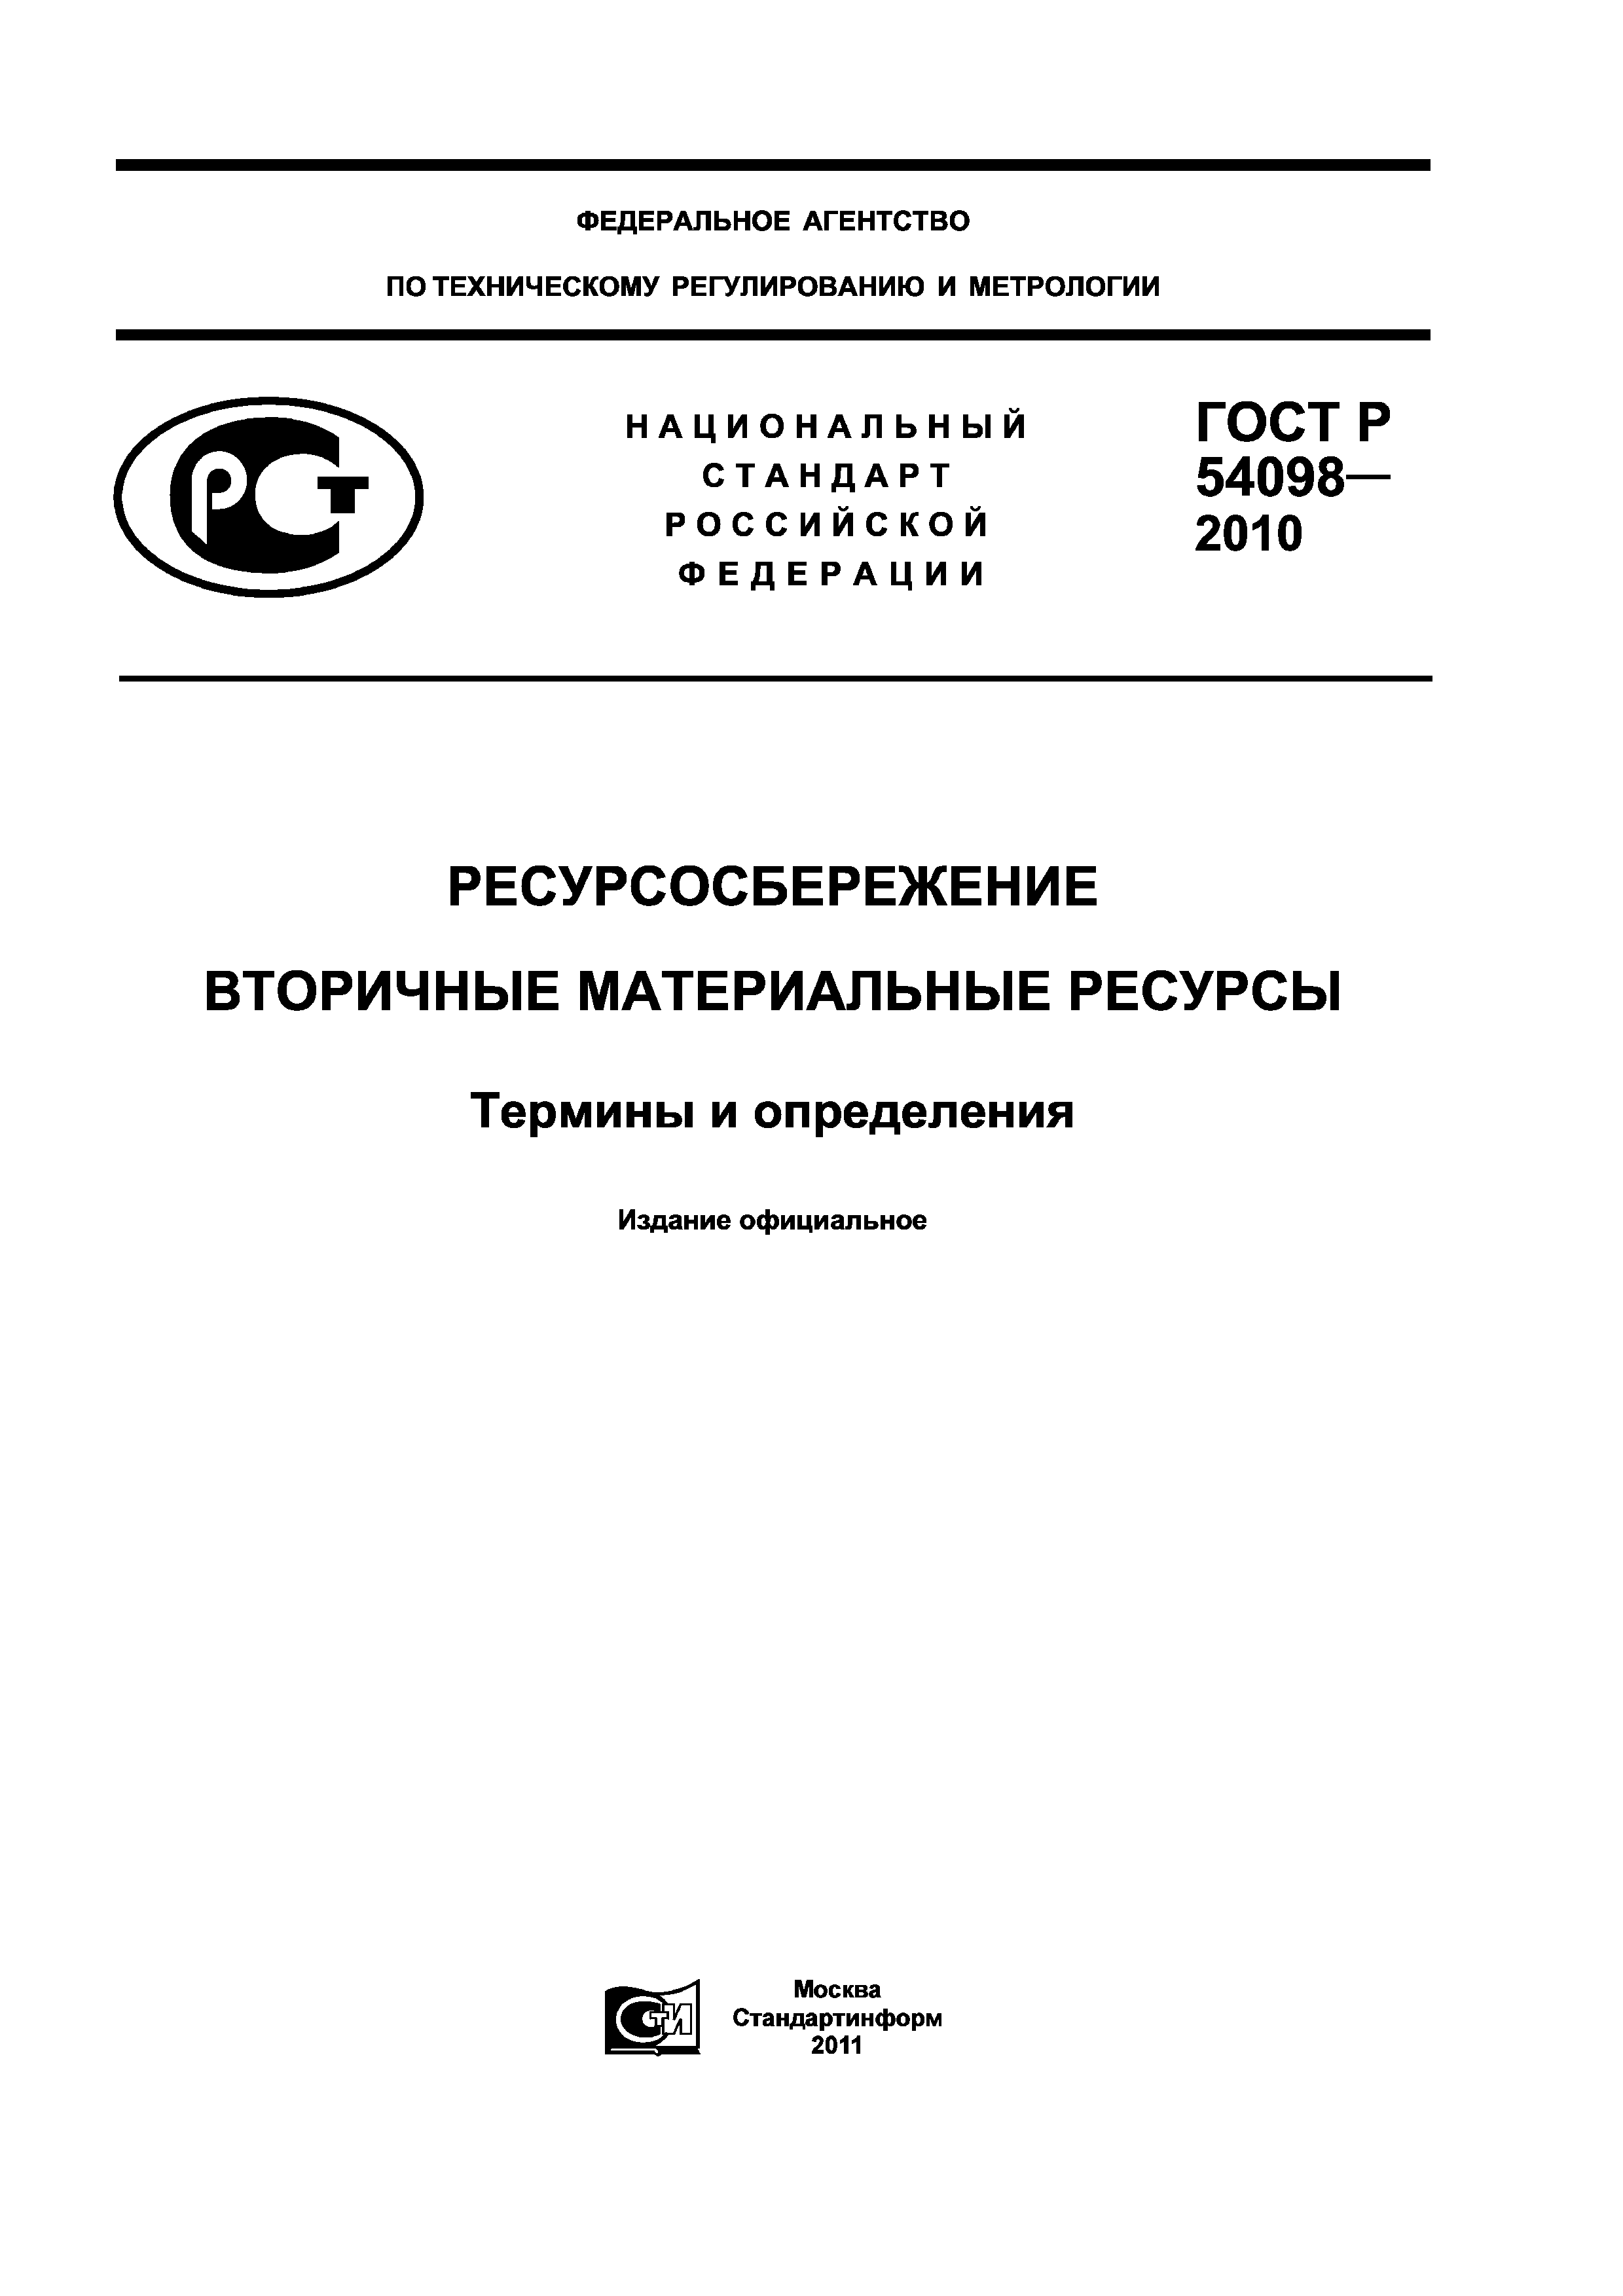 ГОСТ Р 54098-2010